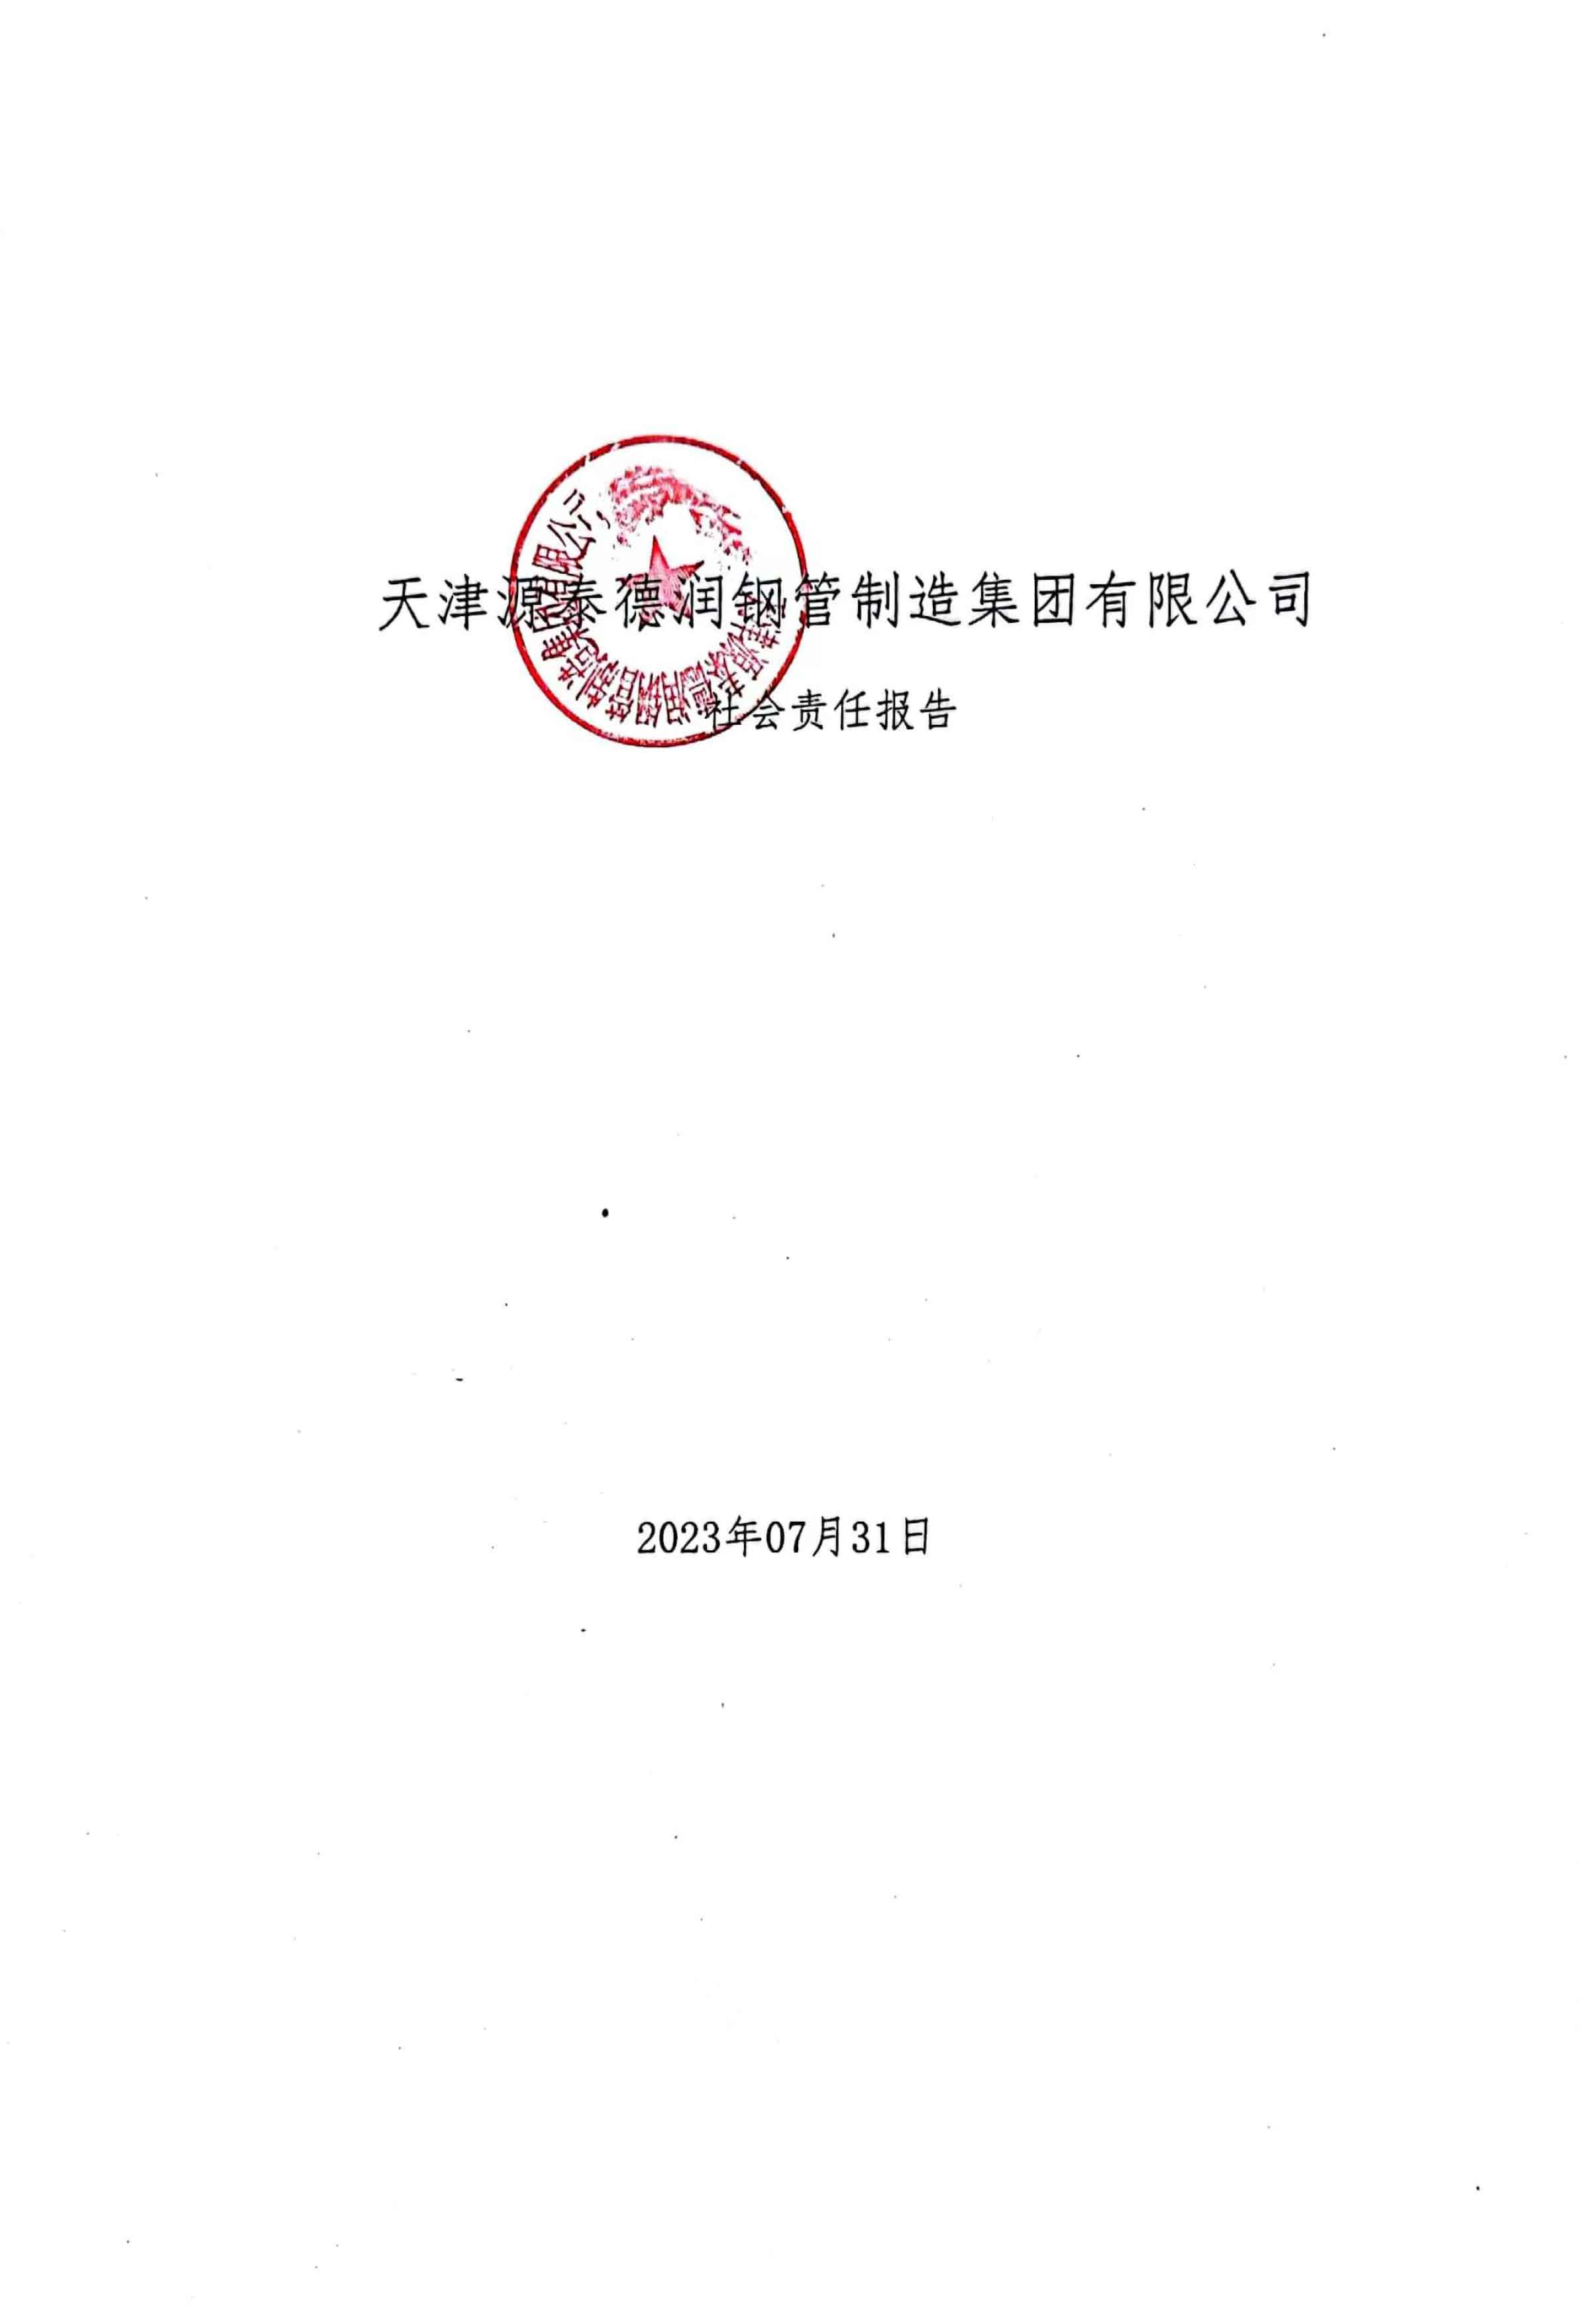 Yuantai Derun steel pipe group 2022 Social Responsibility Report